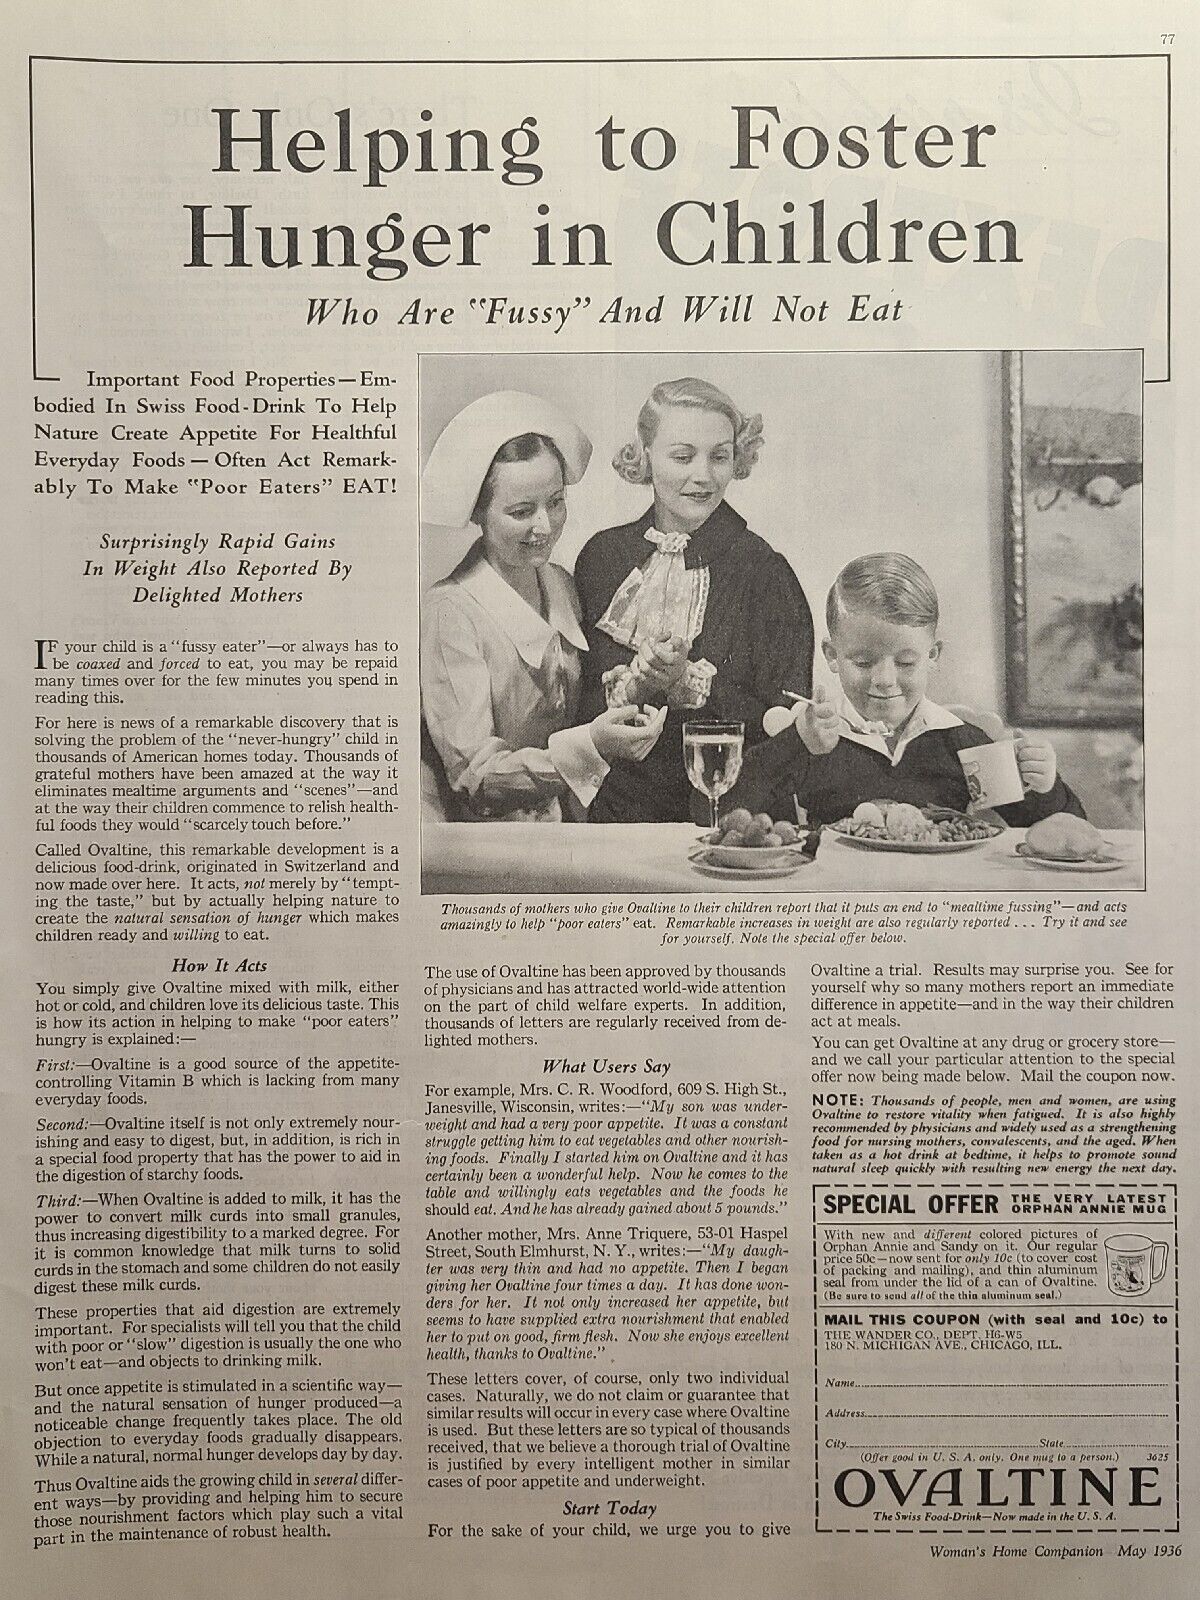 Ovaltine Chocolate Drink Nutrition Orphan Annie Mug Offer Vintage Print Ad 1936